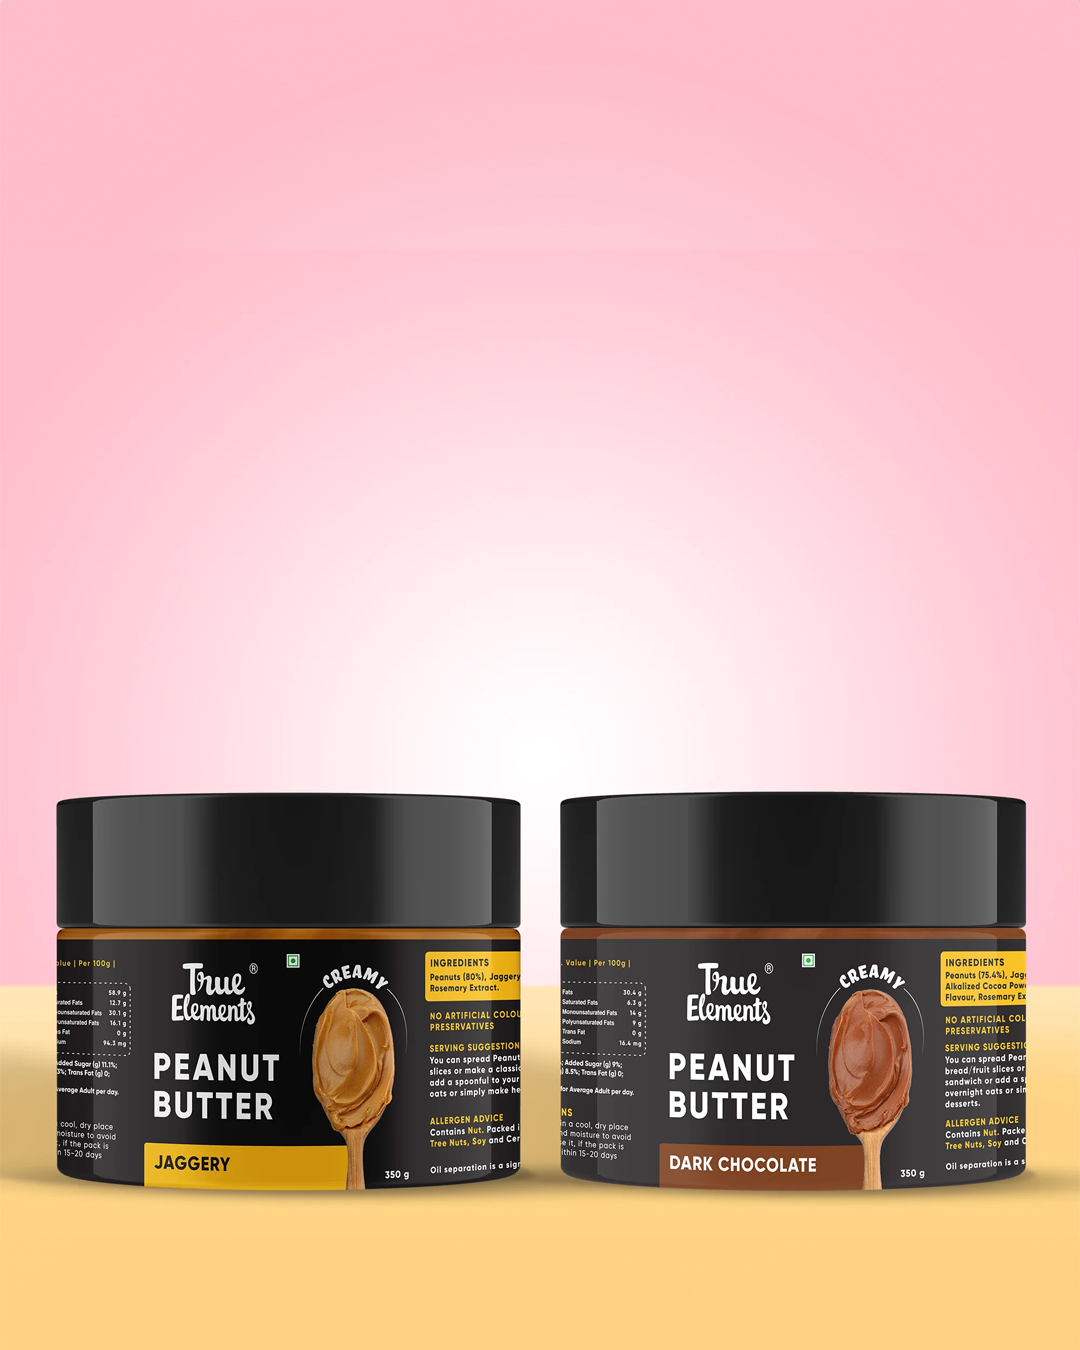 True element peanut butter jaggery and dark chocolate